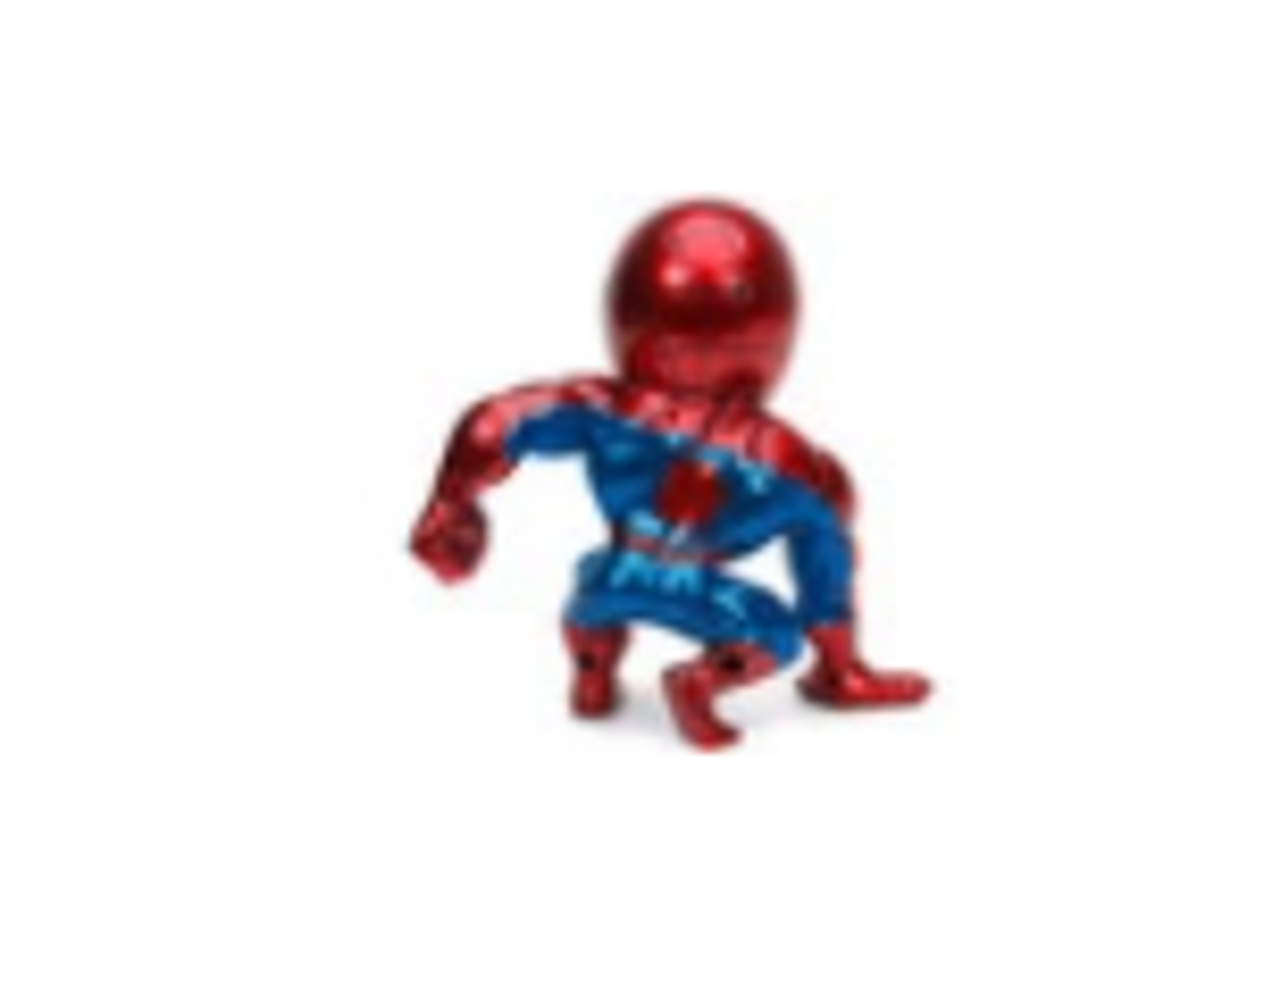 Ultimate Spider-Man 5" Diecast Figure "Marvel's Spider-Man" "Metalfigs" Series by Jada